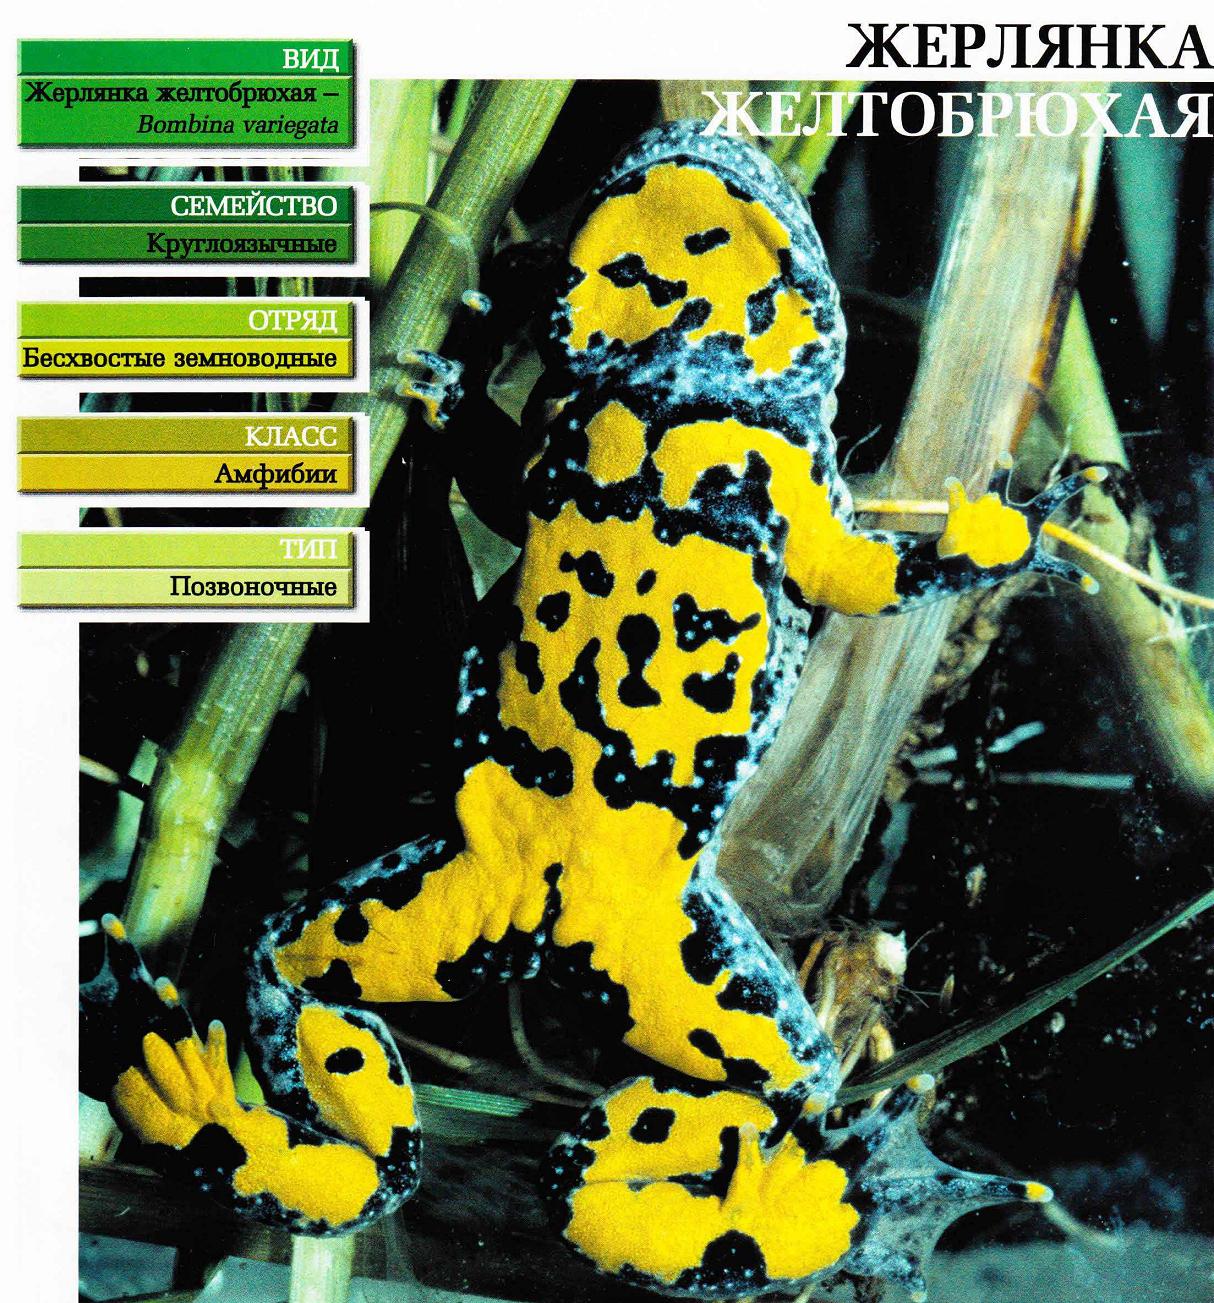 Систематика (научная классификация) жерлянки желтобрюхой. Bombina variegata.